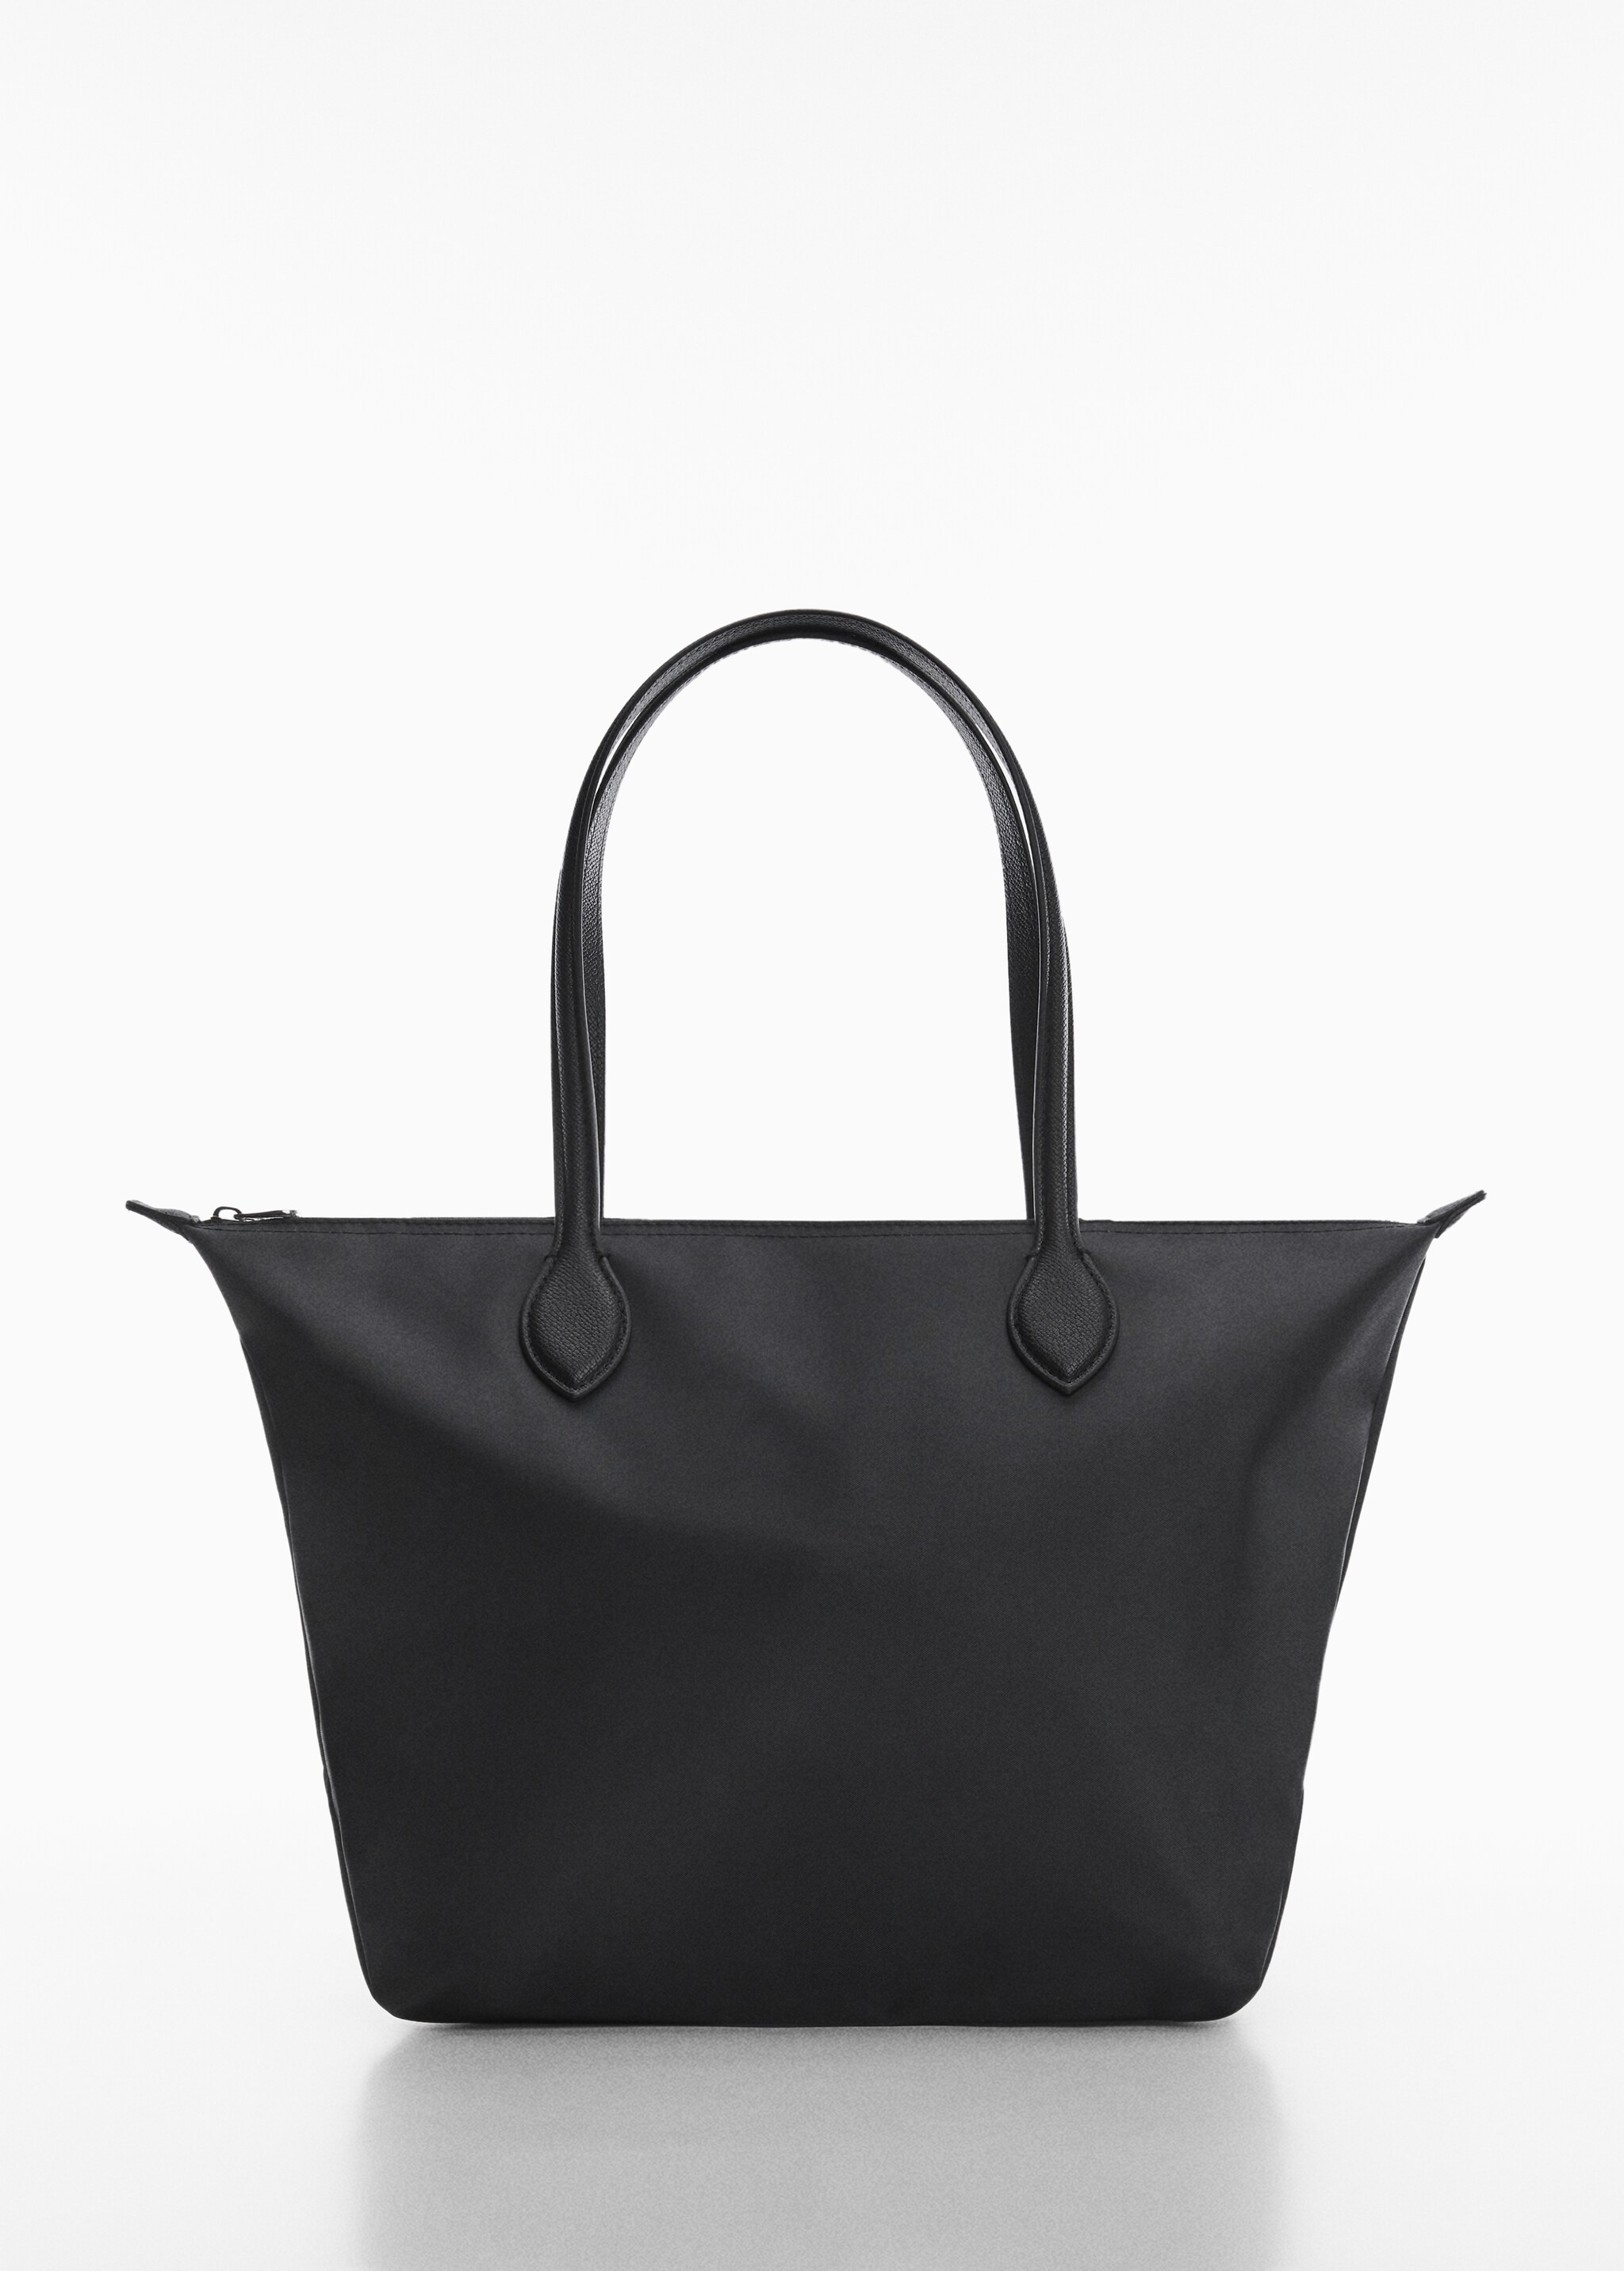 Nylon shopper bag - Article without model